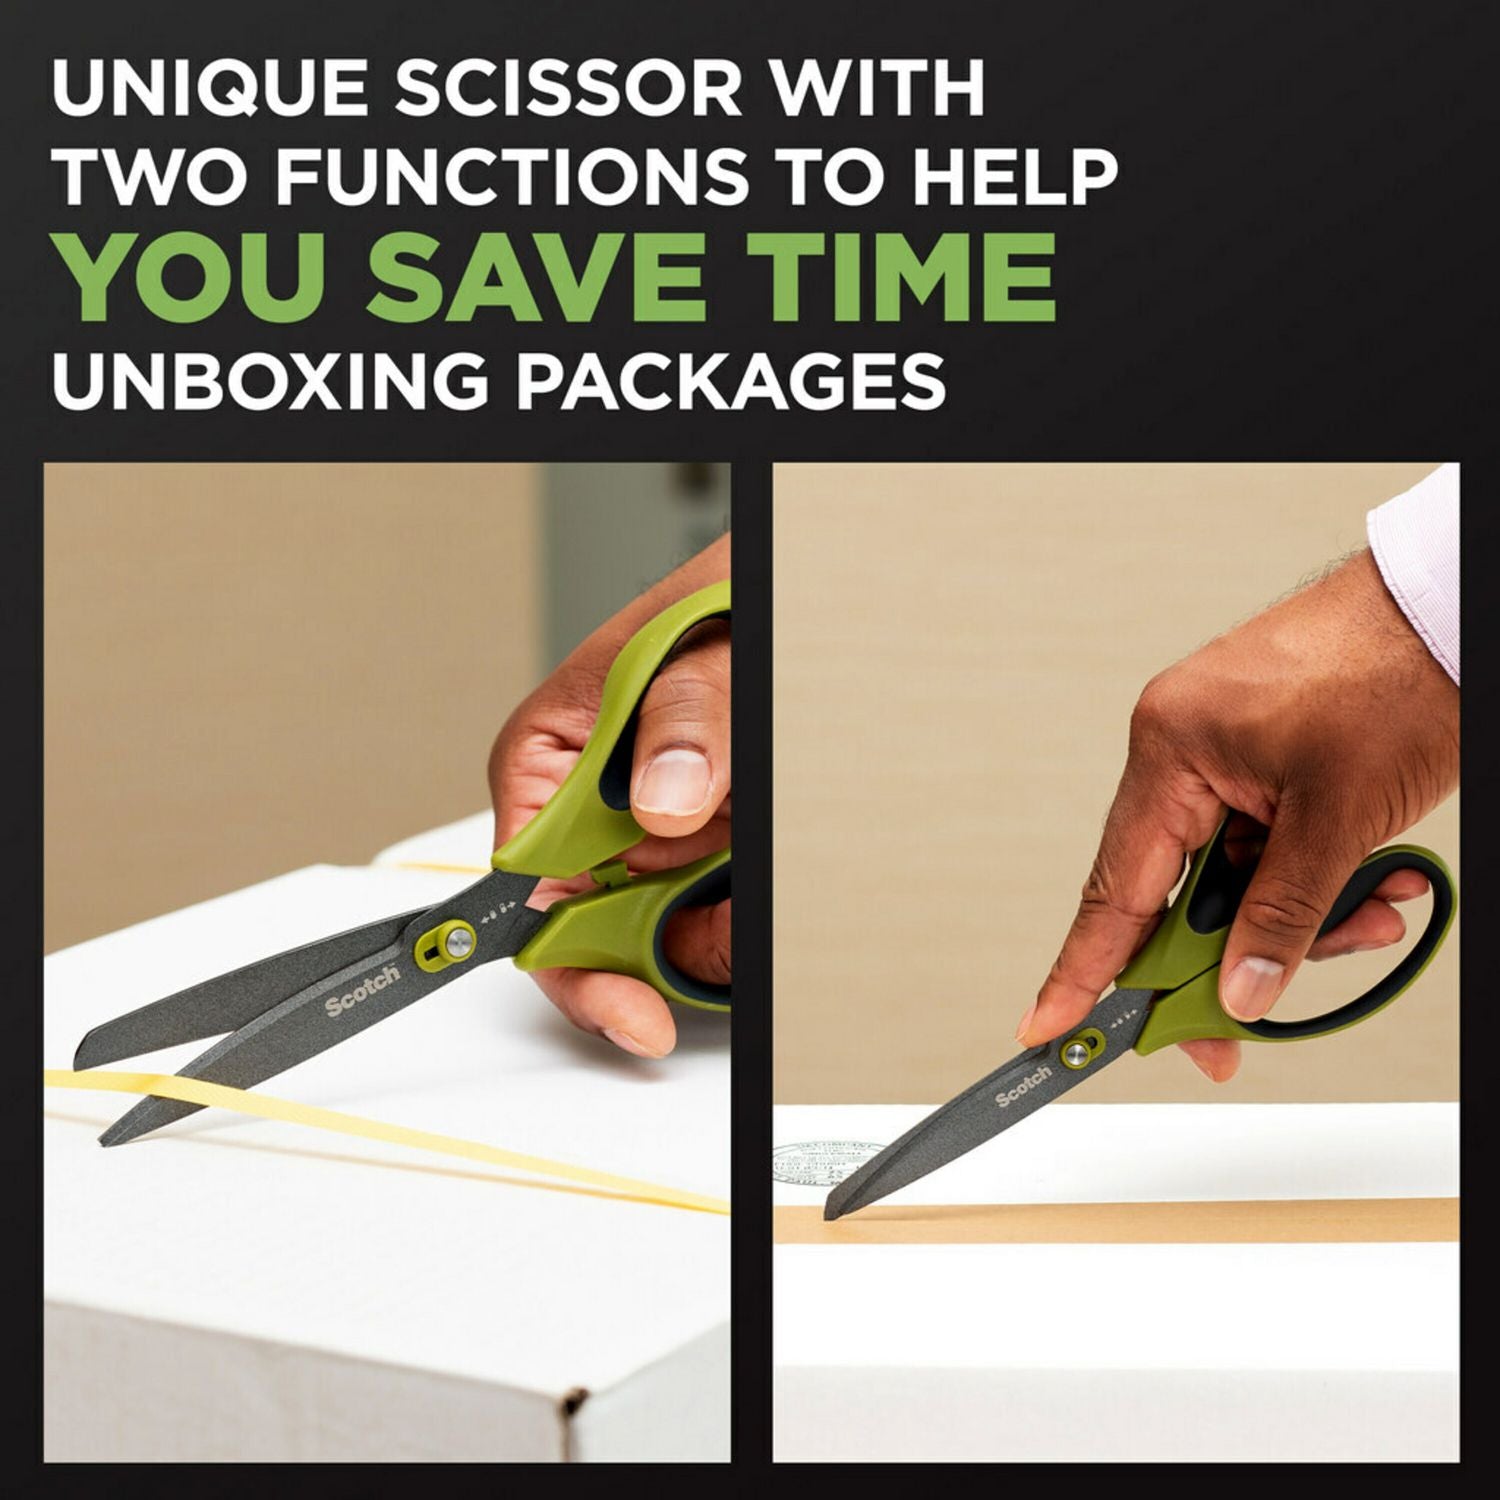 Scotch™ Scotch Non-Stick Unboxing Scissors, 8"" Long, 2.7"" Cut Length, Green/Black Handle